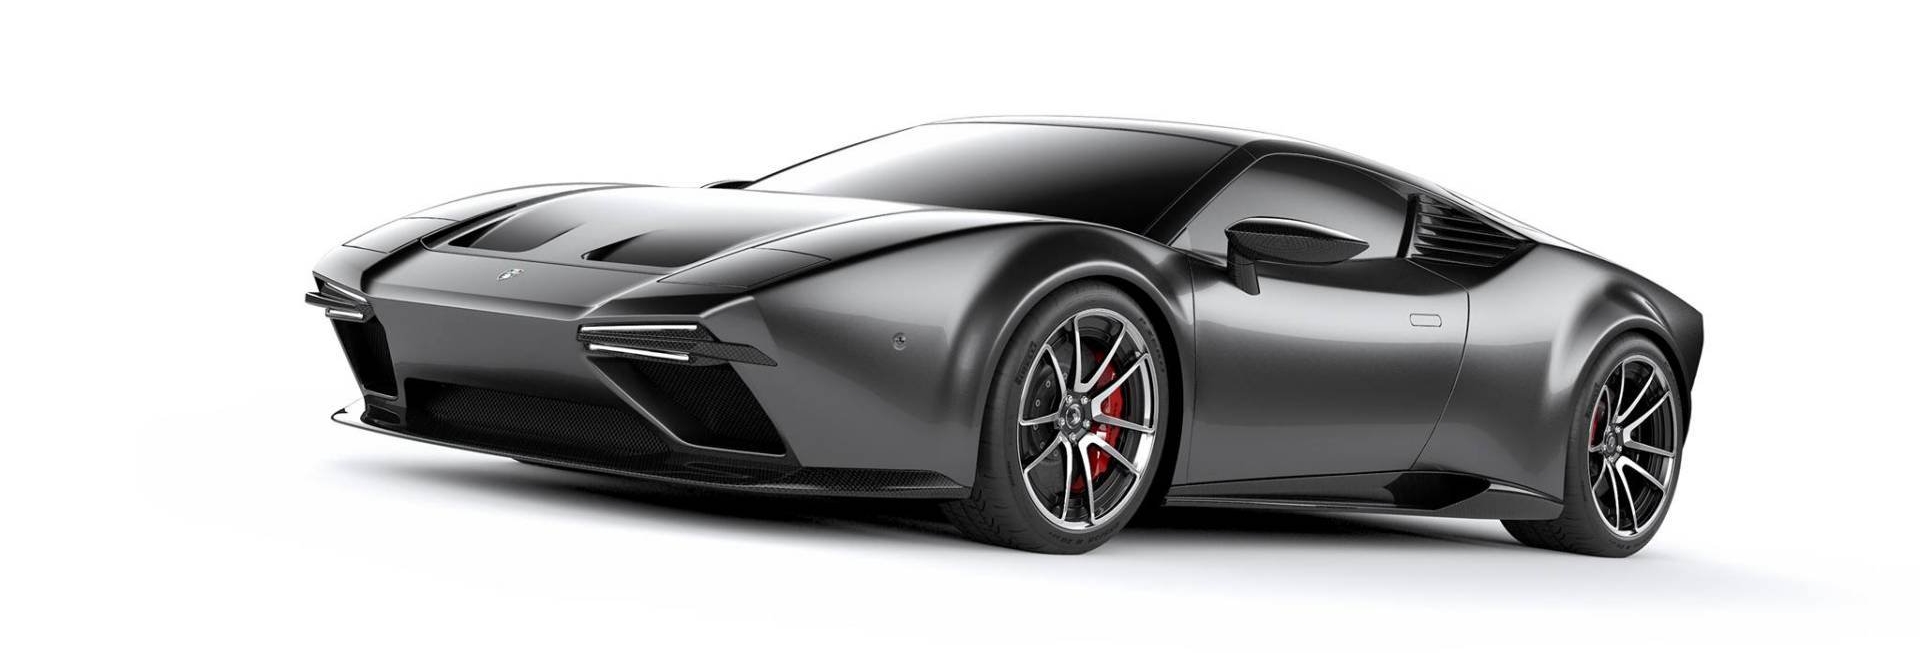 Ares Panther, el tributo a DeTomaso con base Lamborghini